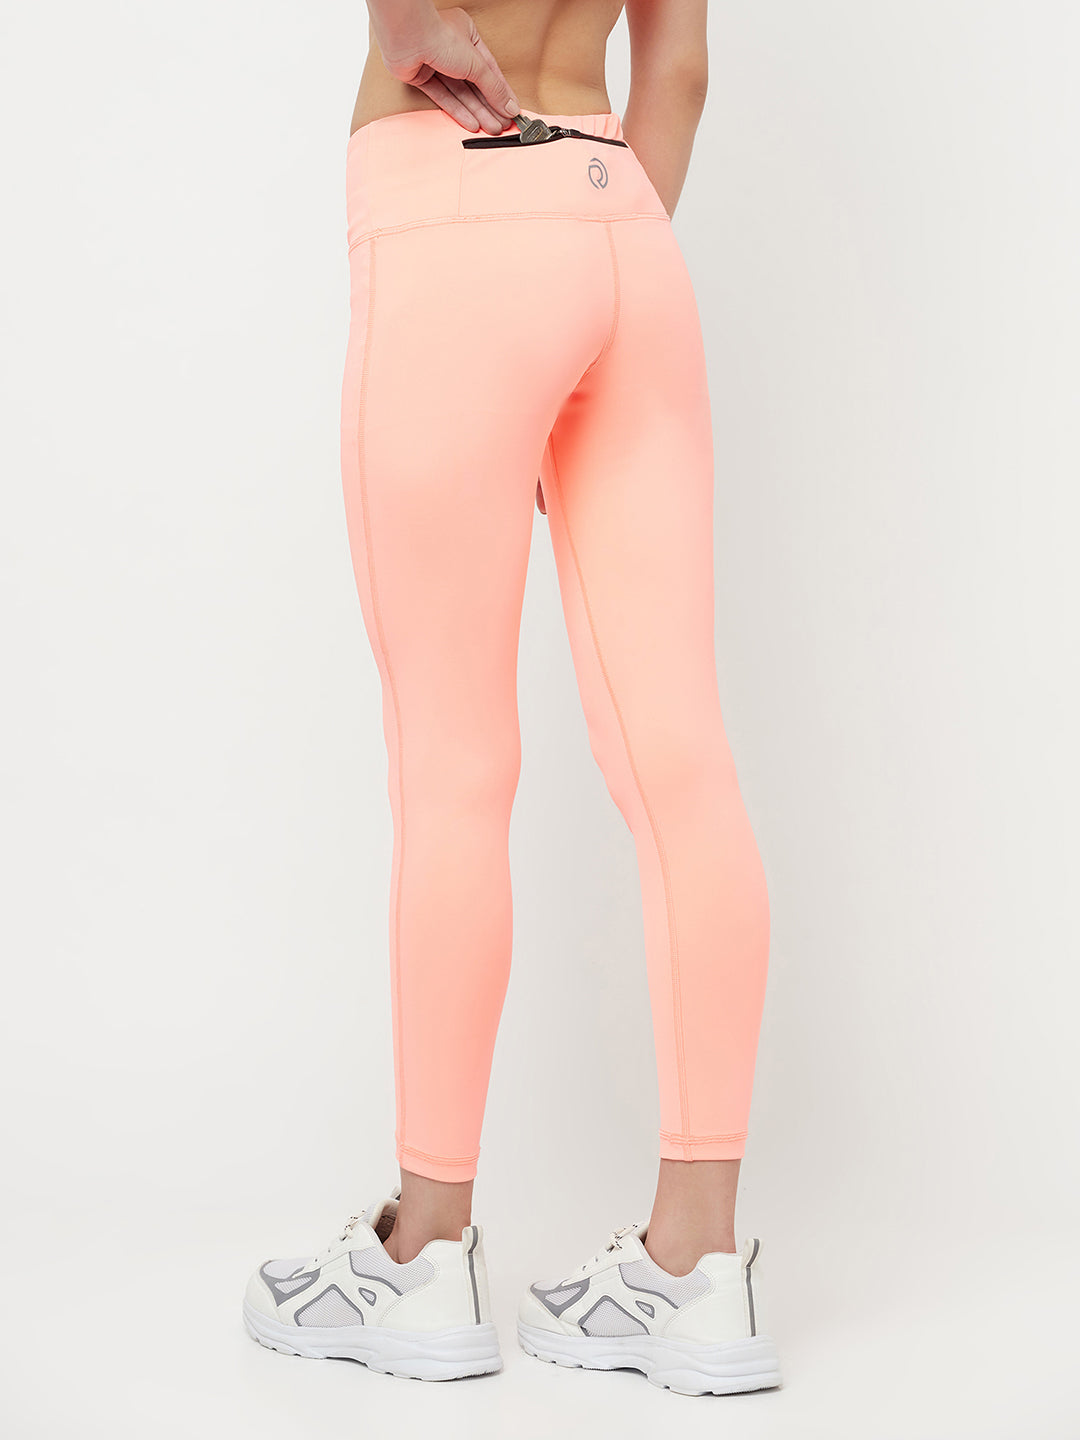 Phone pocket leggings & sports bra combo - Women's Pastel Pink